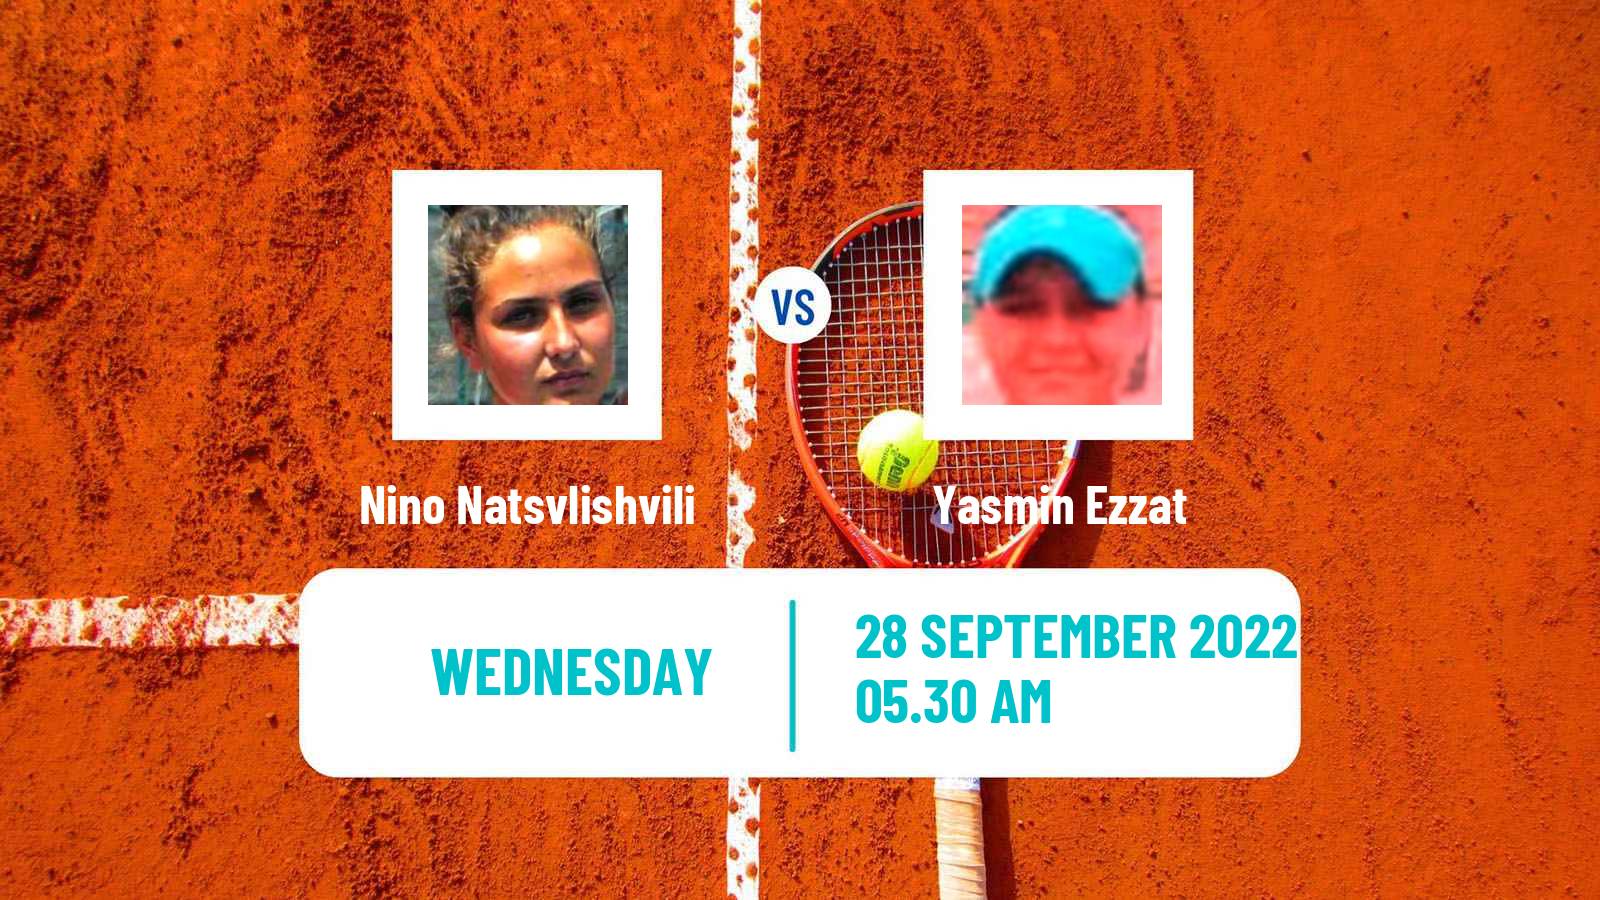 Tennis ITF Tournaments Nino Natsvlishvili - Yasmin Ezzat